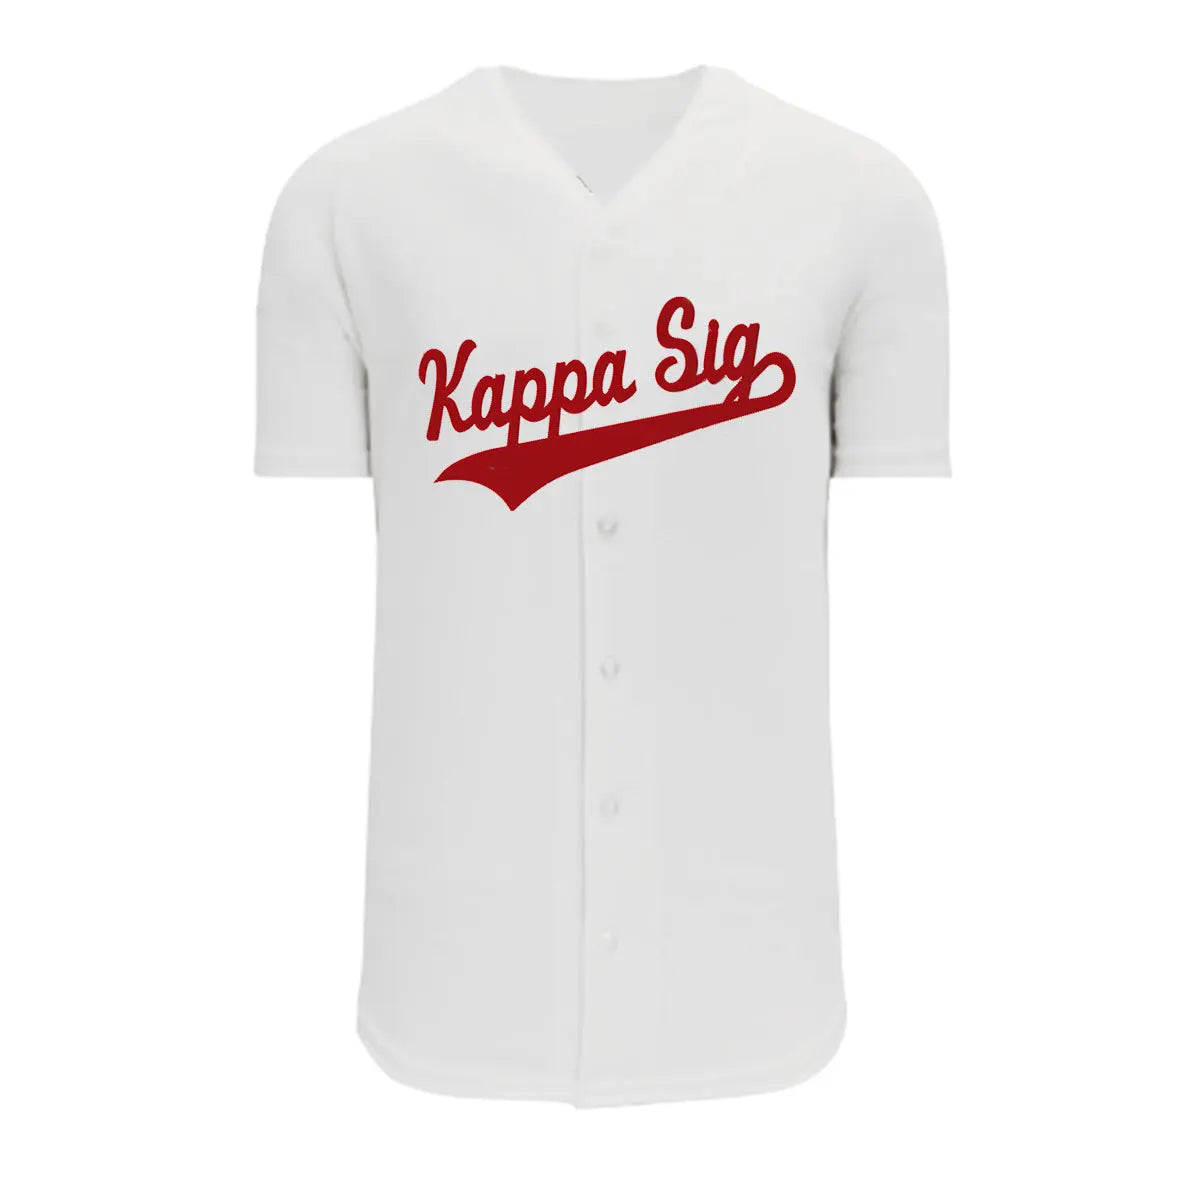 Kappa Sig White Mesh Baseball Jersey - Kappa Sigma Official Store